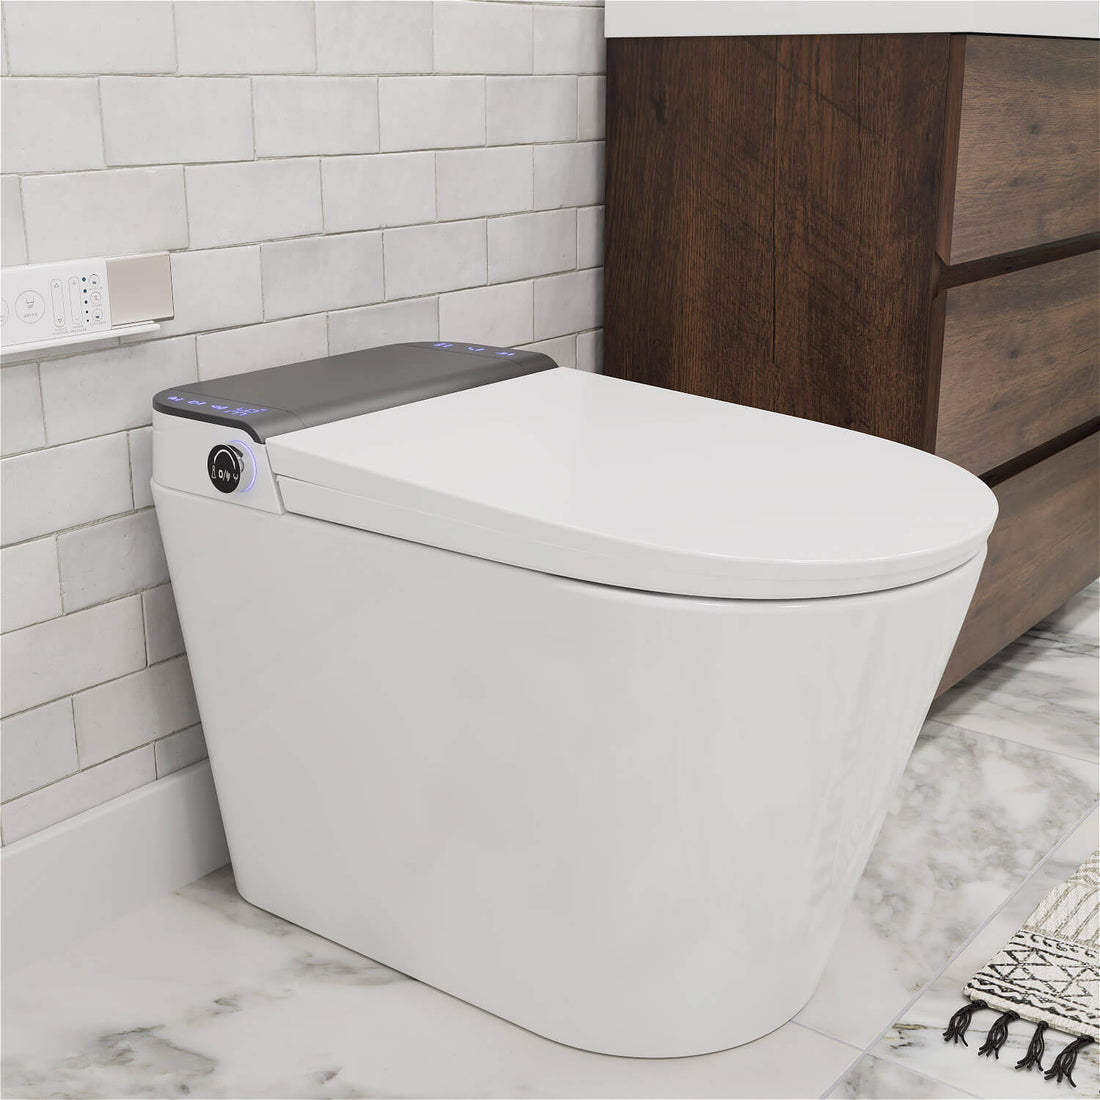 GIVINGTREE Smart Toilet with Bidet Built inHeated Seat Automatic Flush Night Light